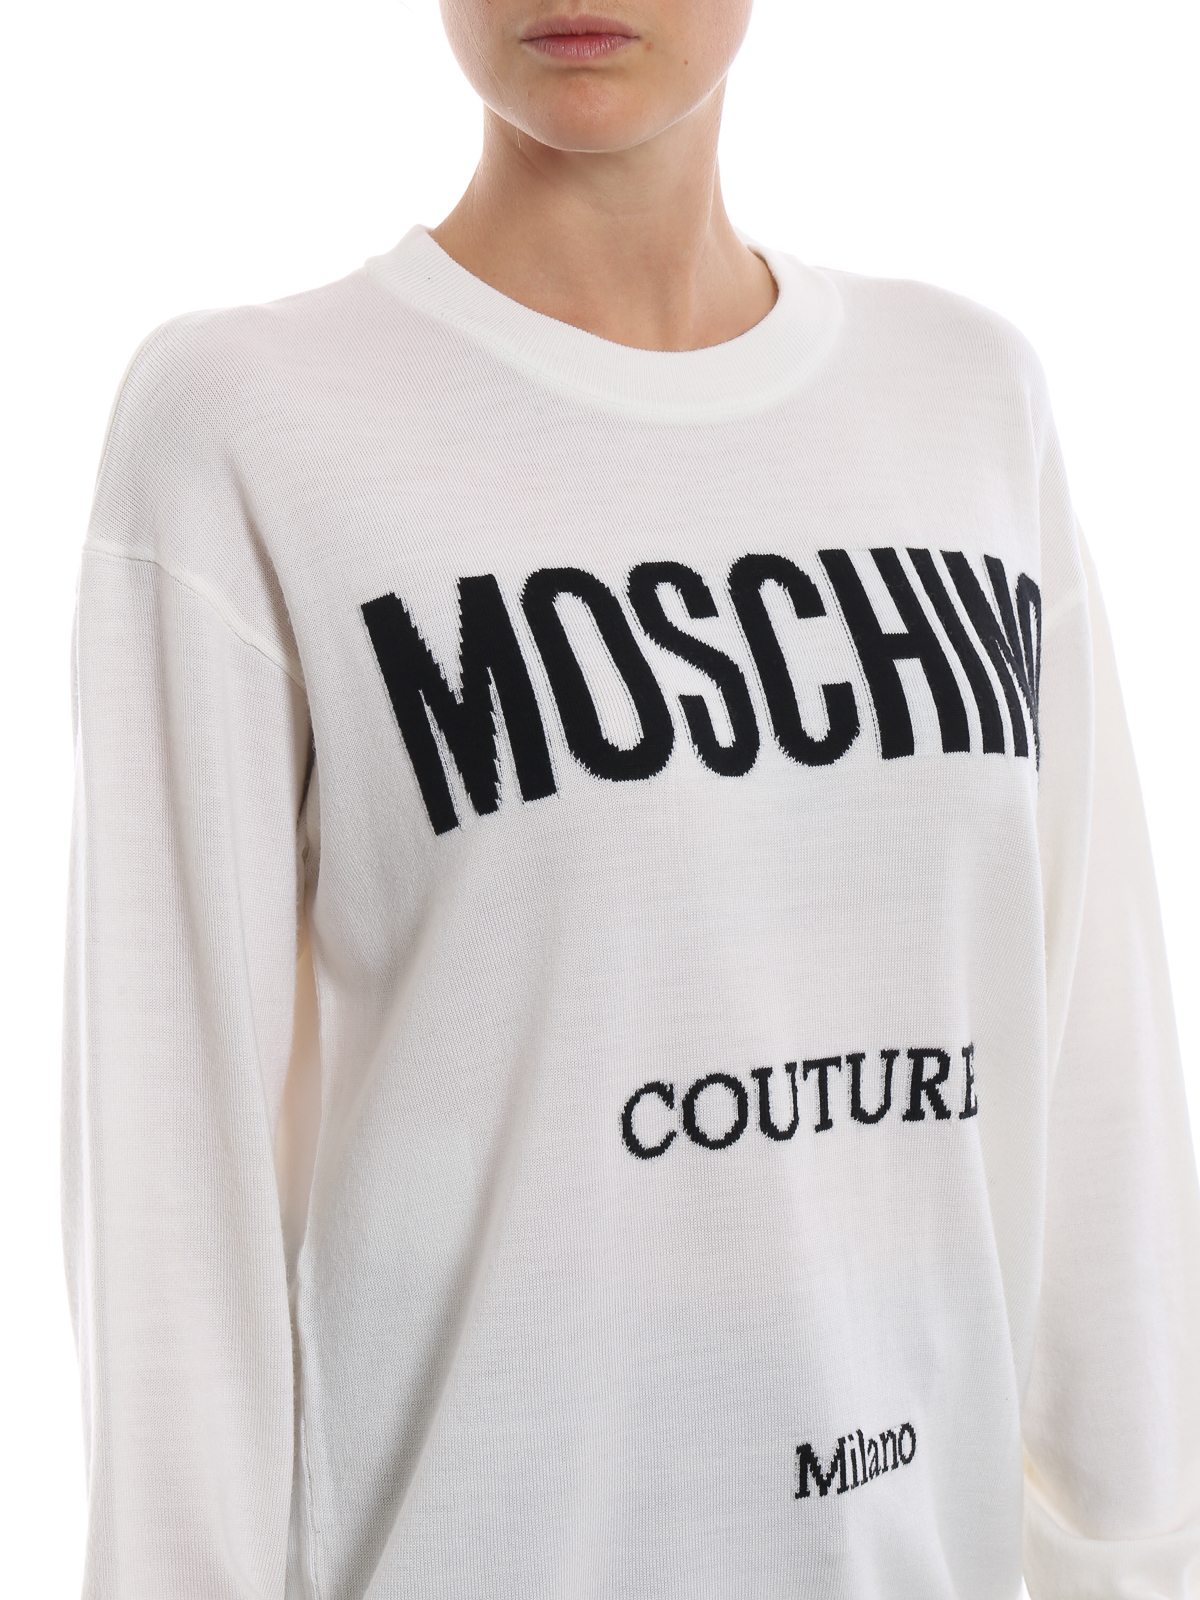 Moschino Couture intarsia white wool 